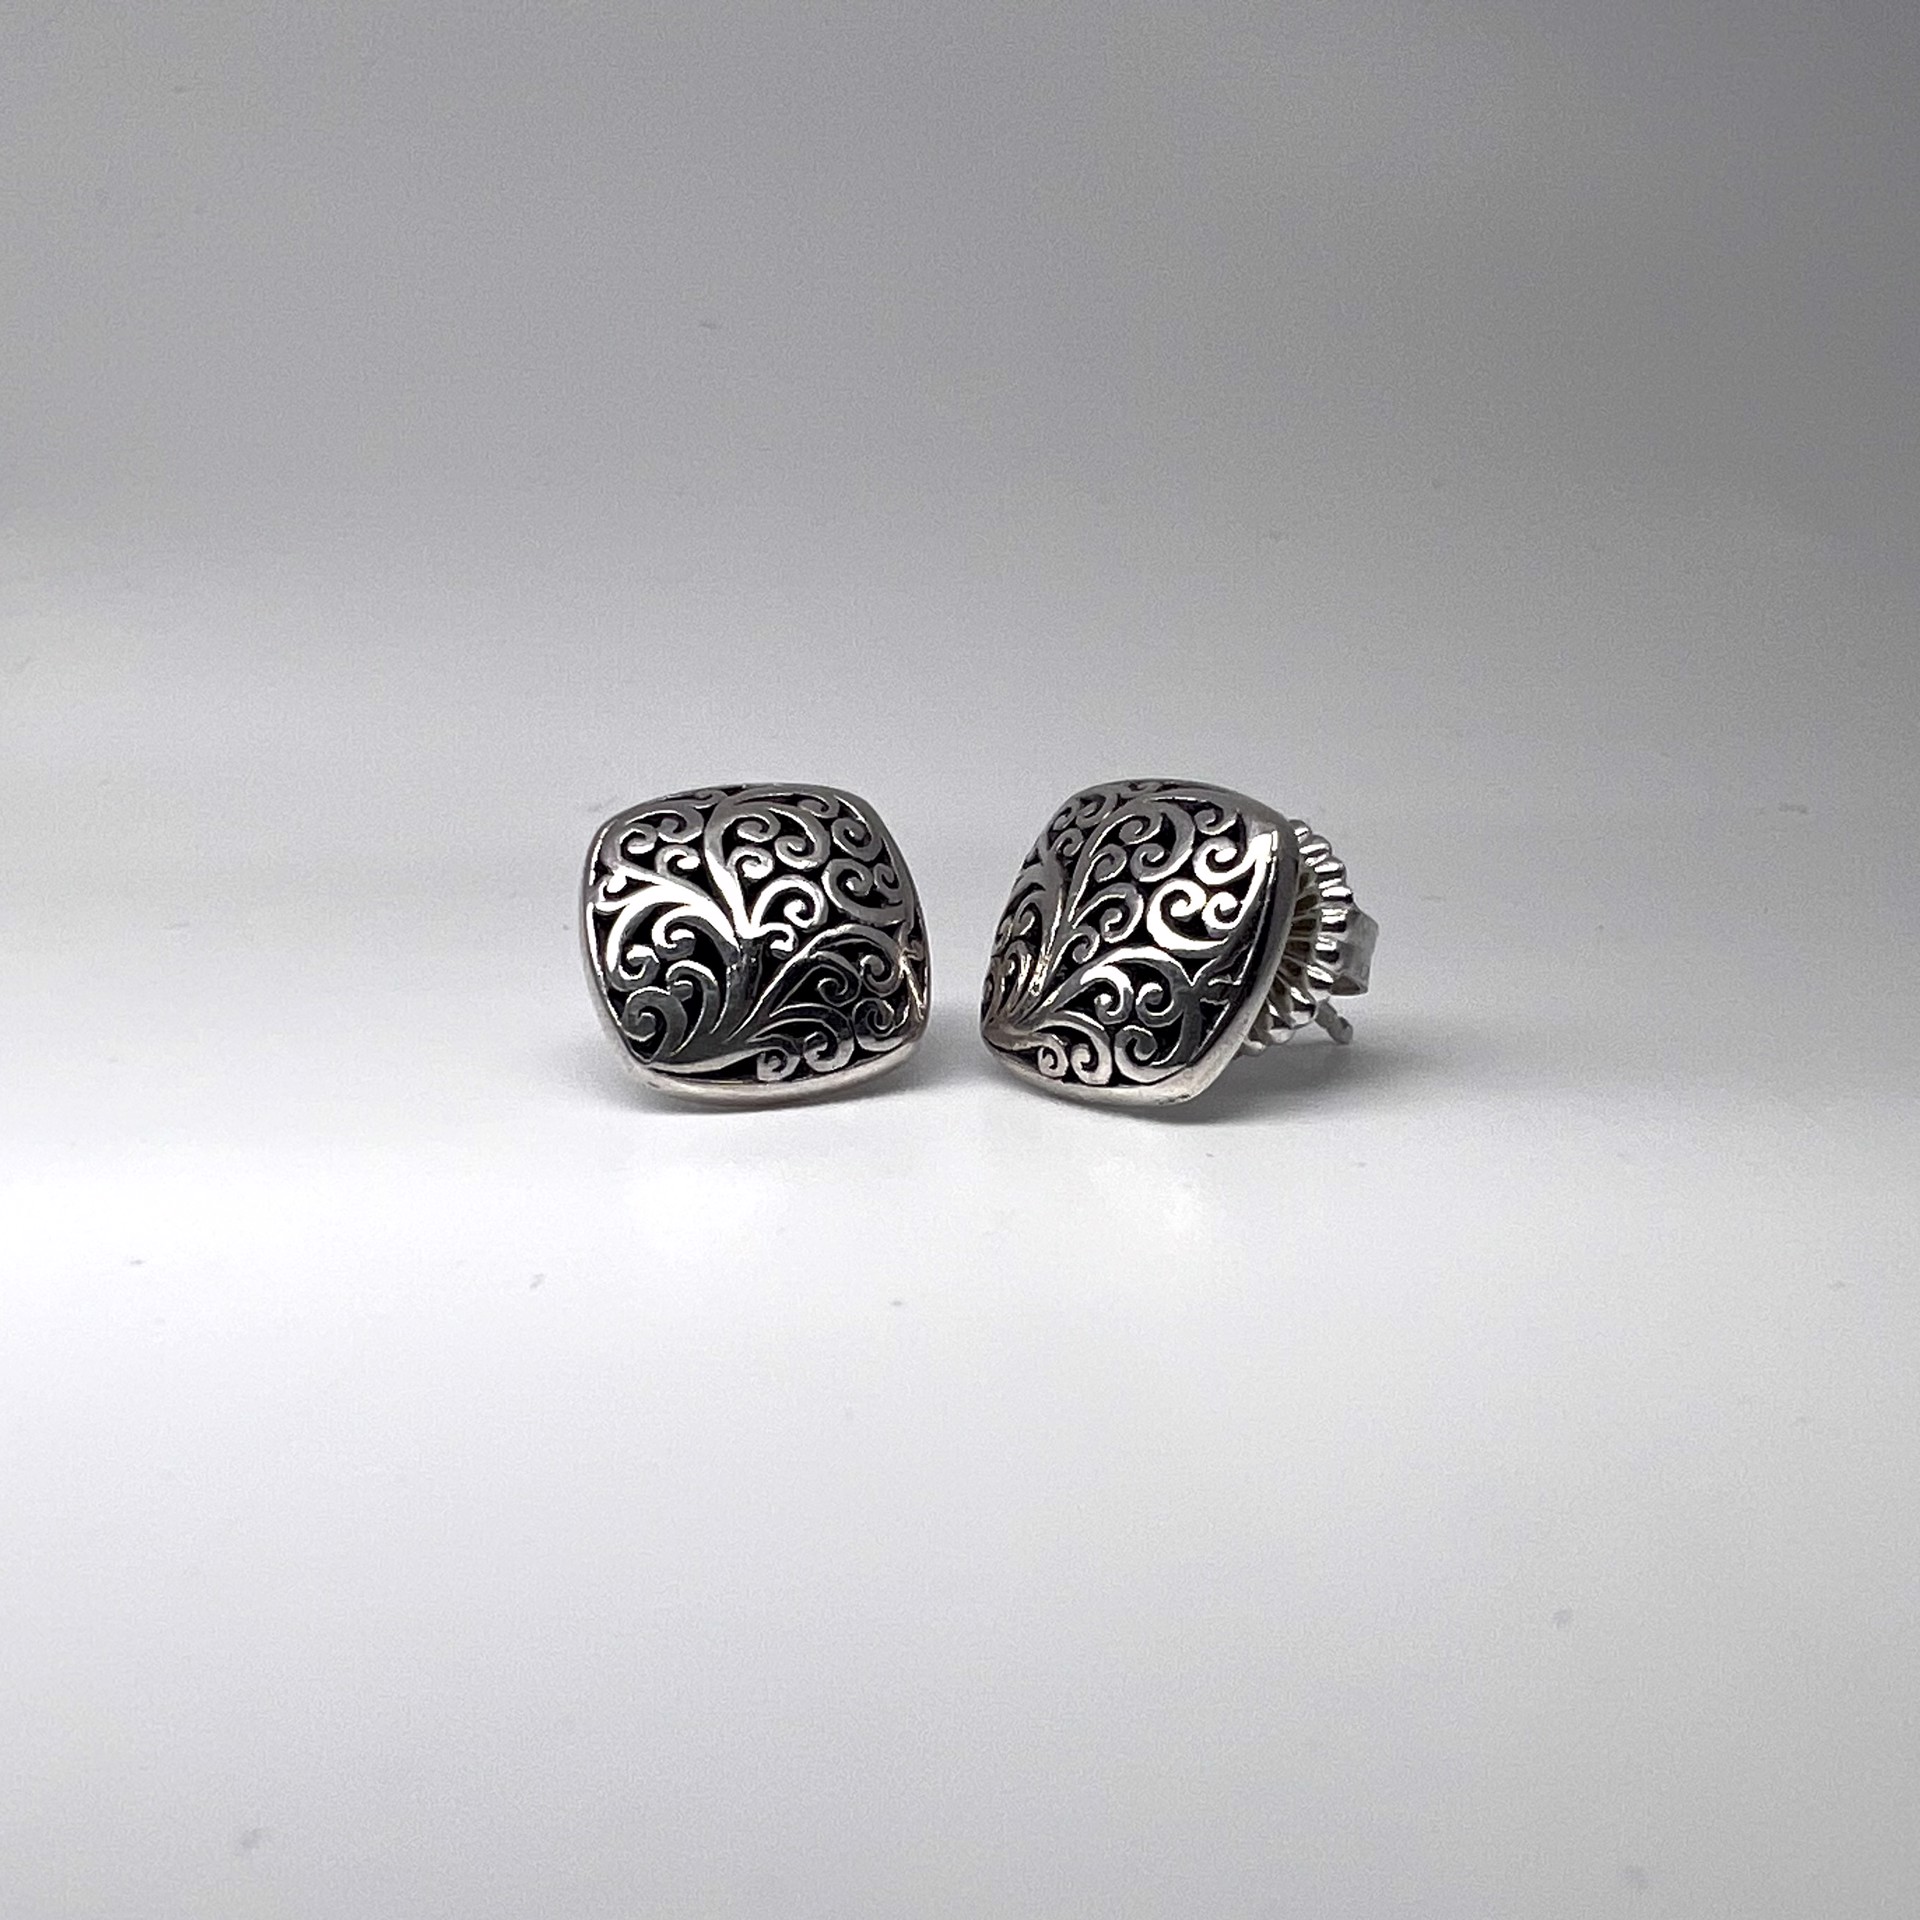 Handmade Sterling Silver Earrings by Lois Hill